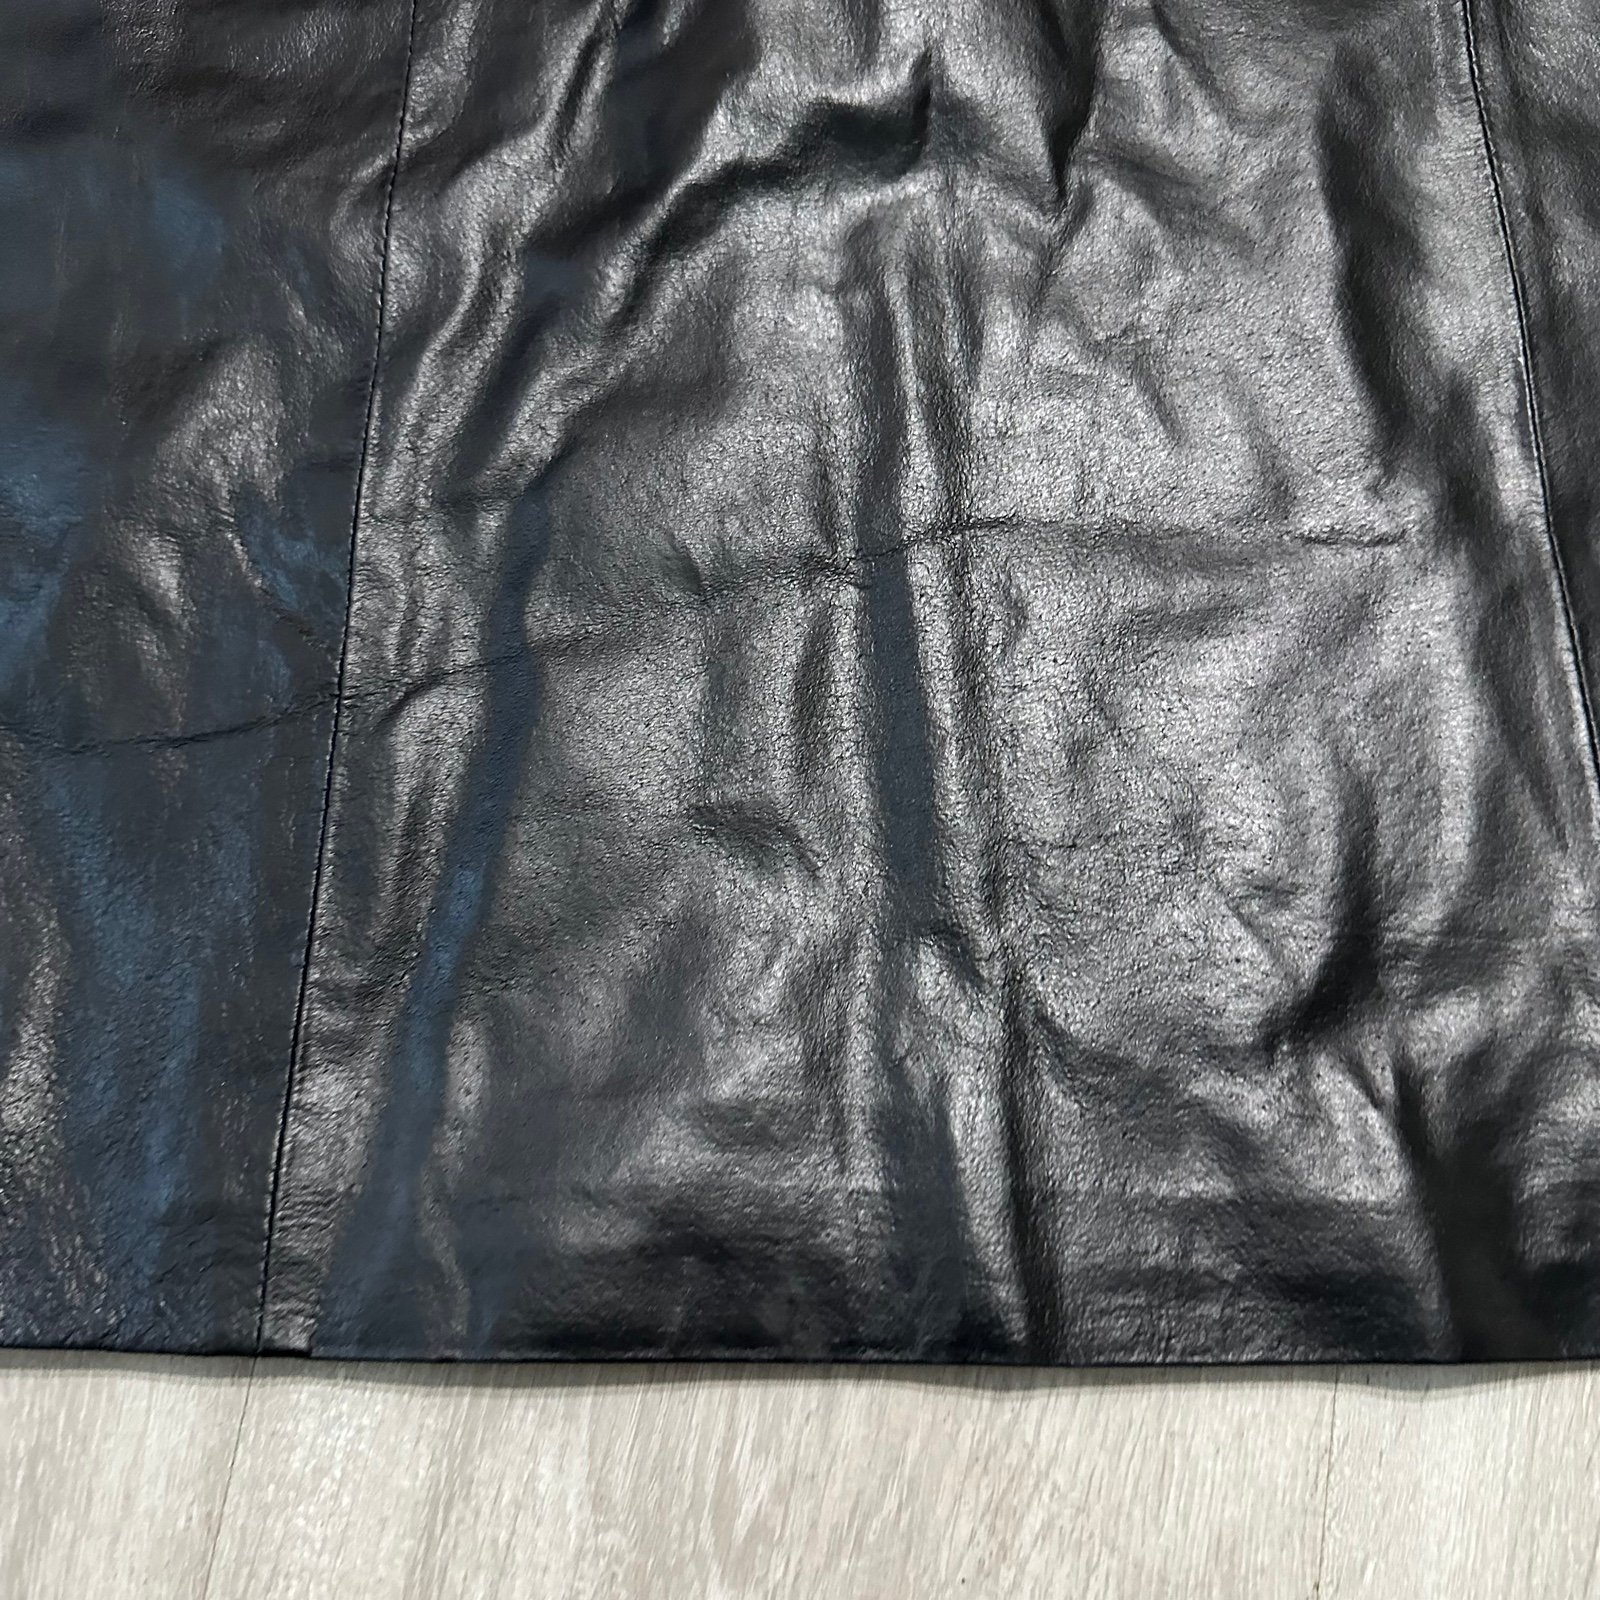 floor price Etam Black Real Leather Pencil Skirt Sz 10 GU9LBPAjQ best sale